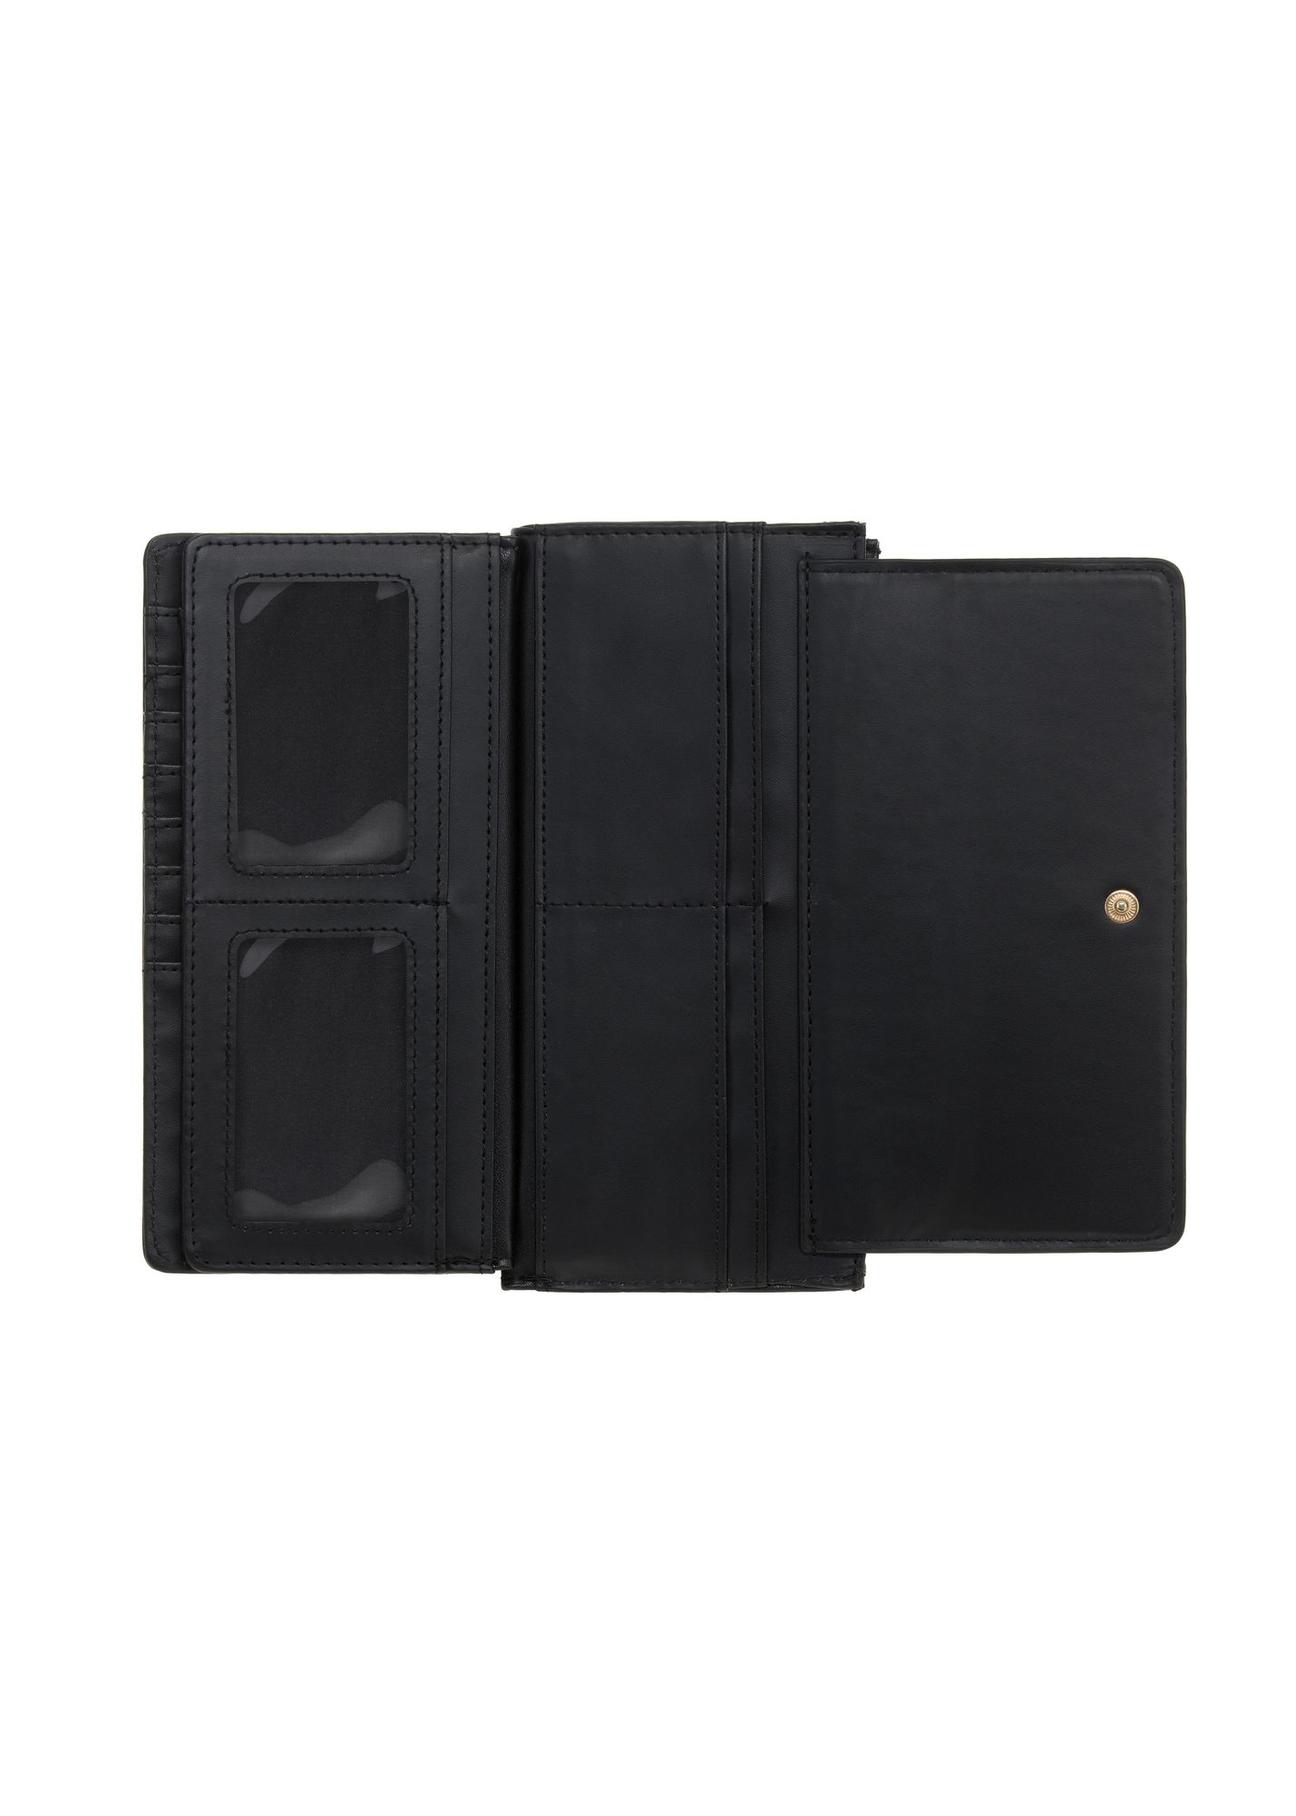 Duży czarny portfel damski z dżetami POREC-0345-99(Z23)